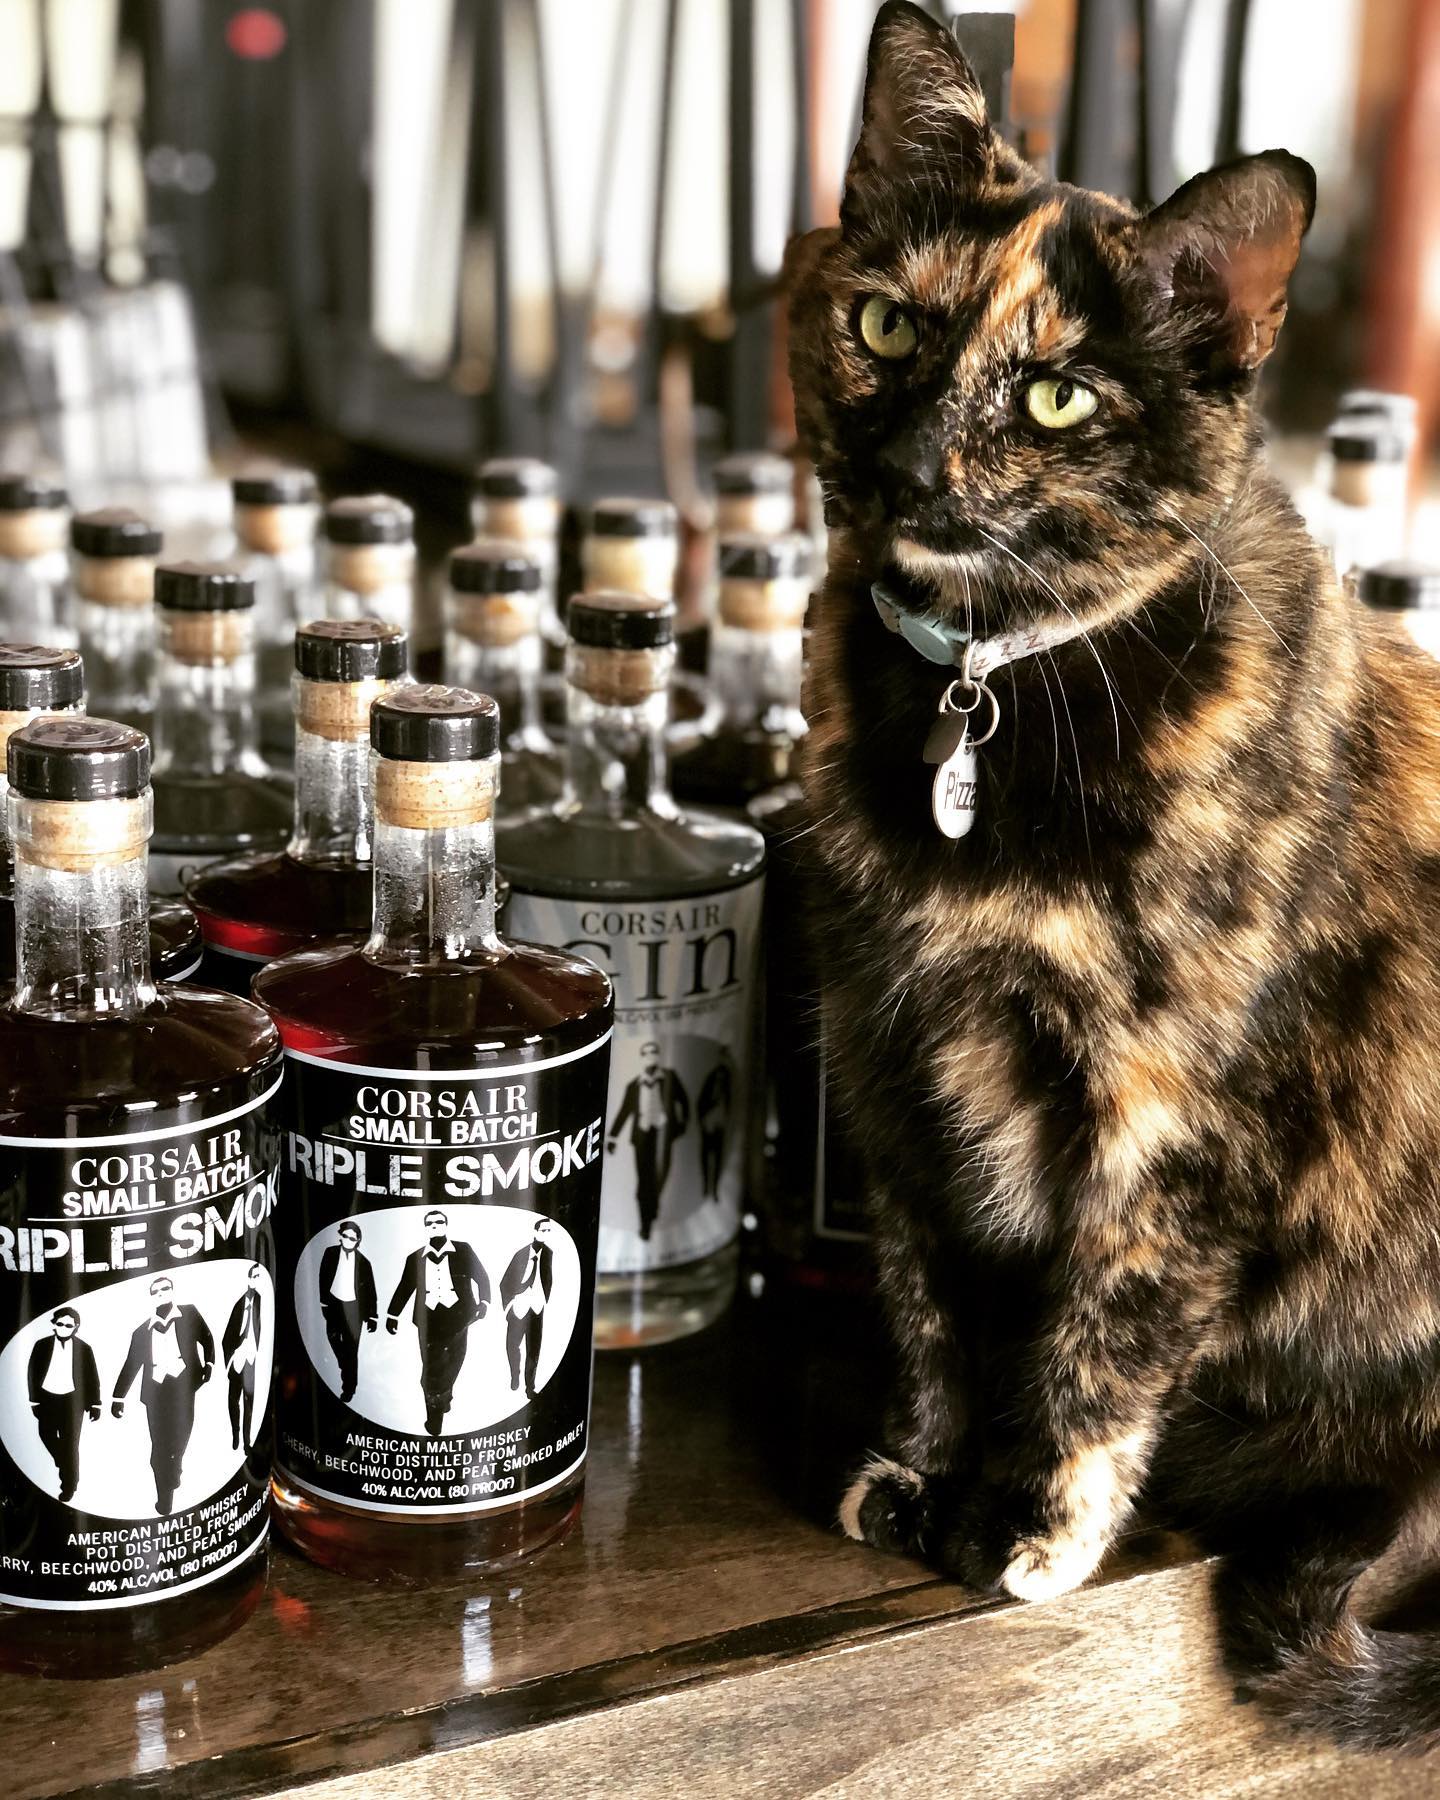 A cat sitting in front of Corsair bottles of liquor at corsair distillery 